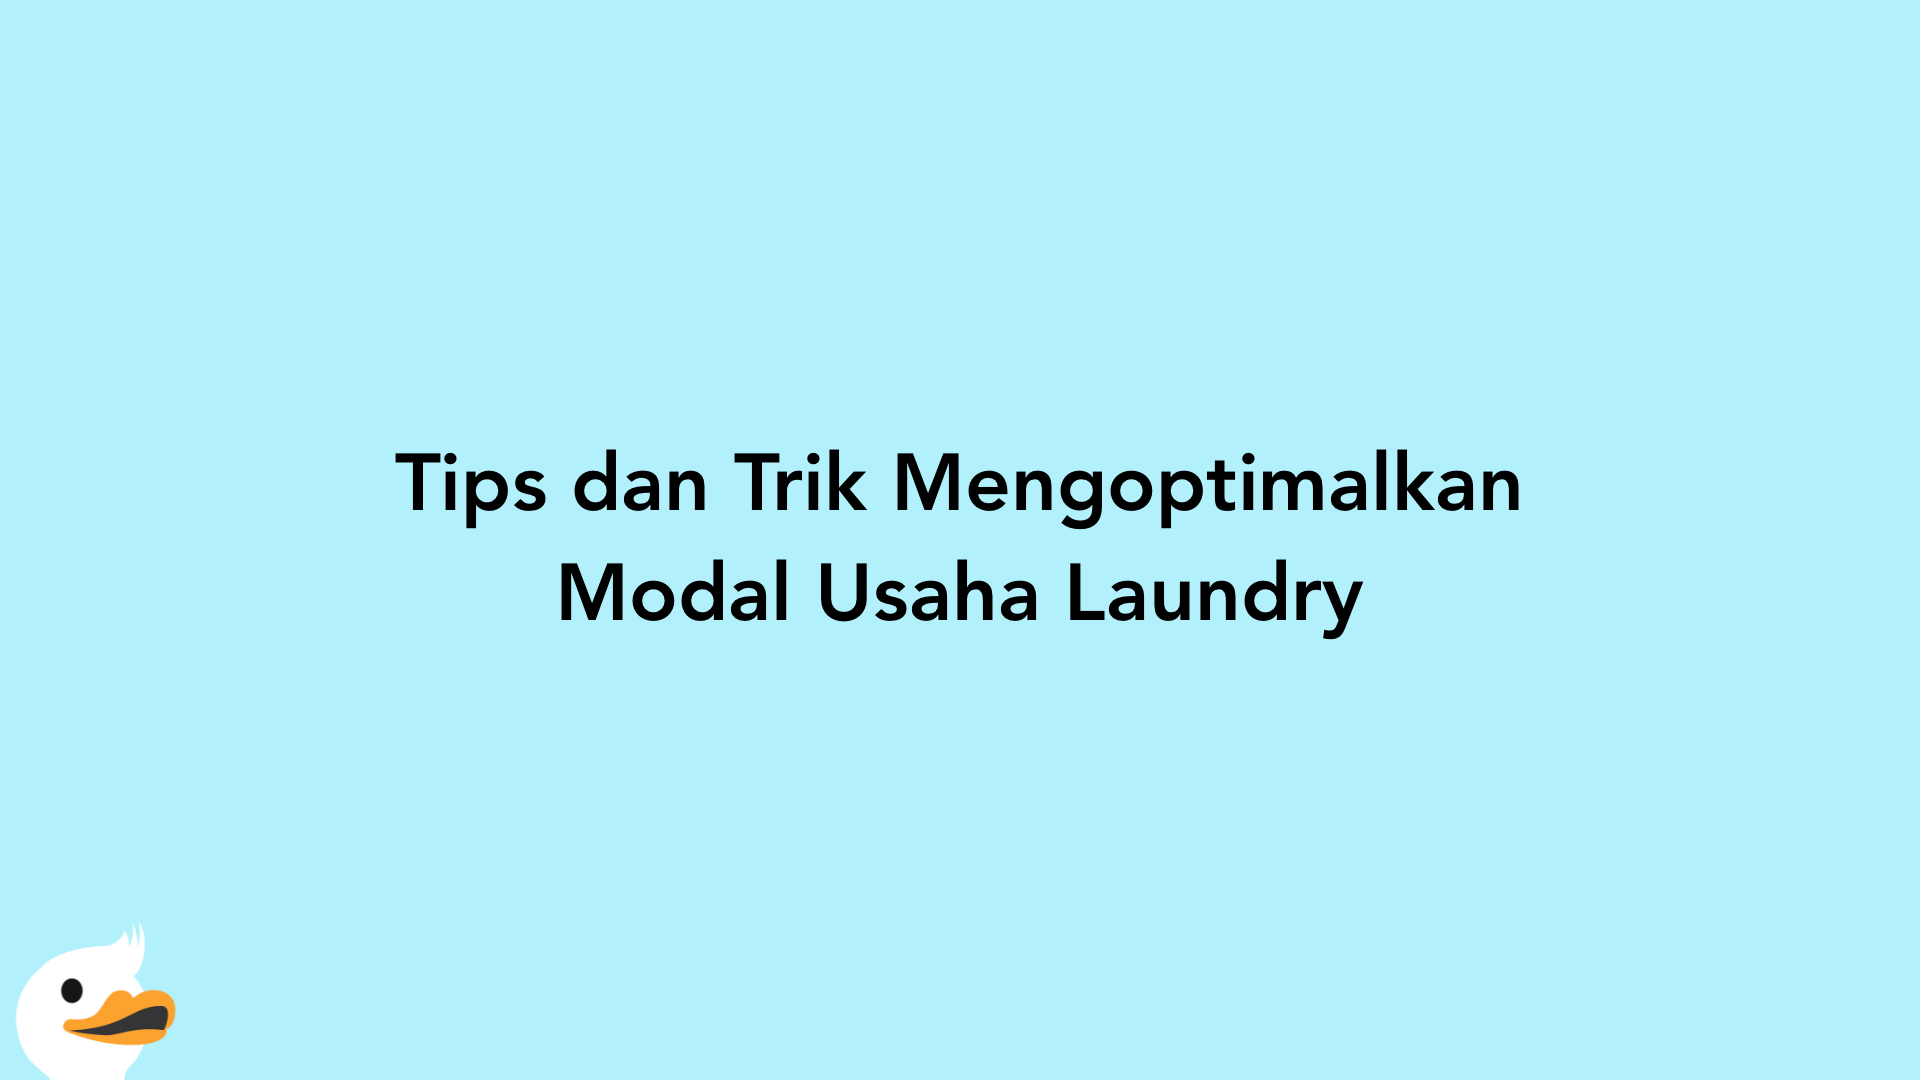 Tips dan Trik Mengoptimalkan Modal Usaha Laundry